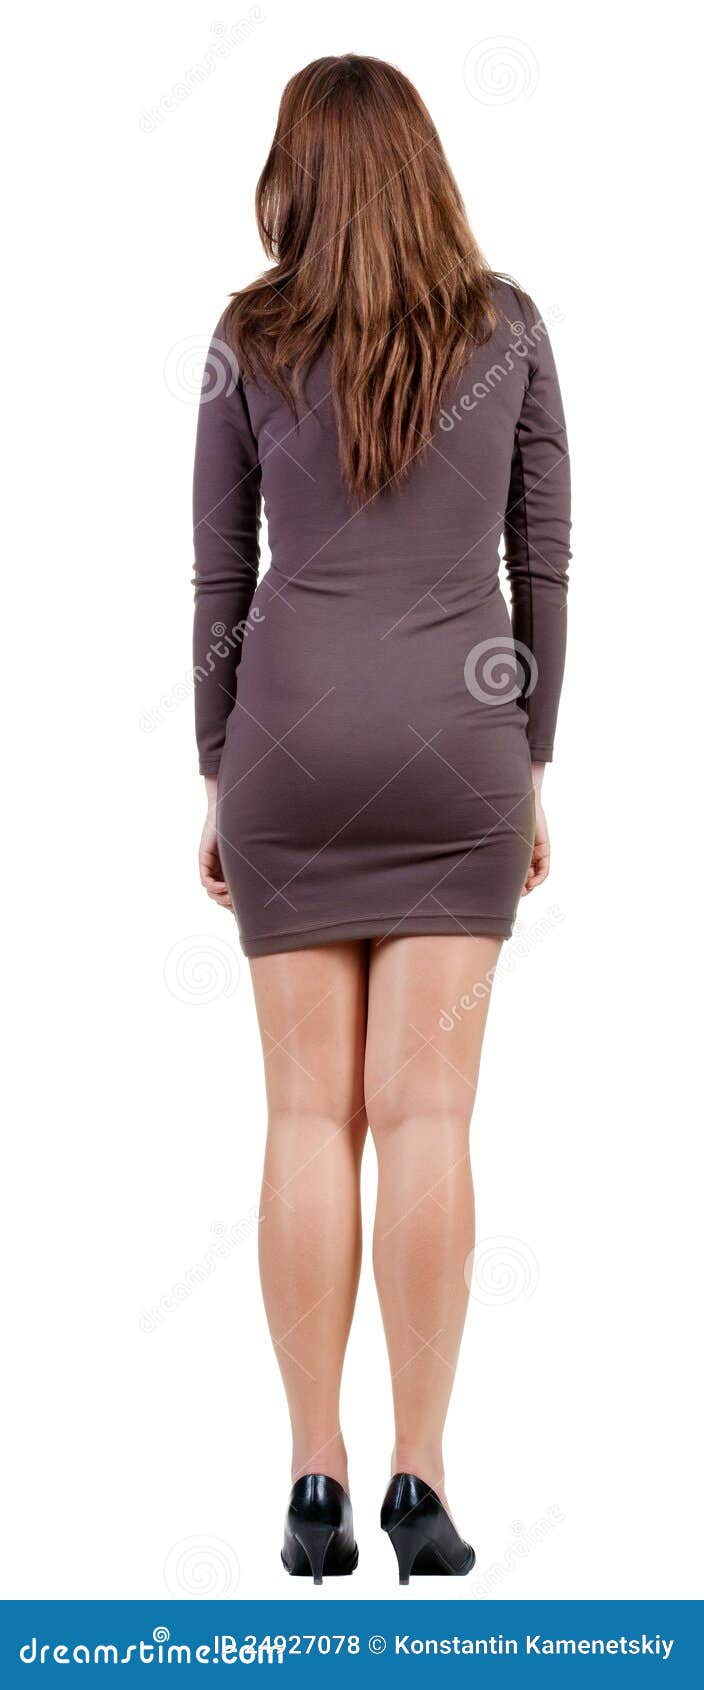 Back View Of Standing Beautiful Woman. Stock Photo - Image of brunette, kitten: 24927078